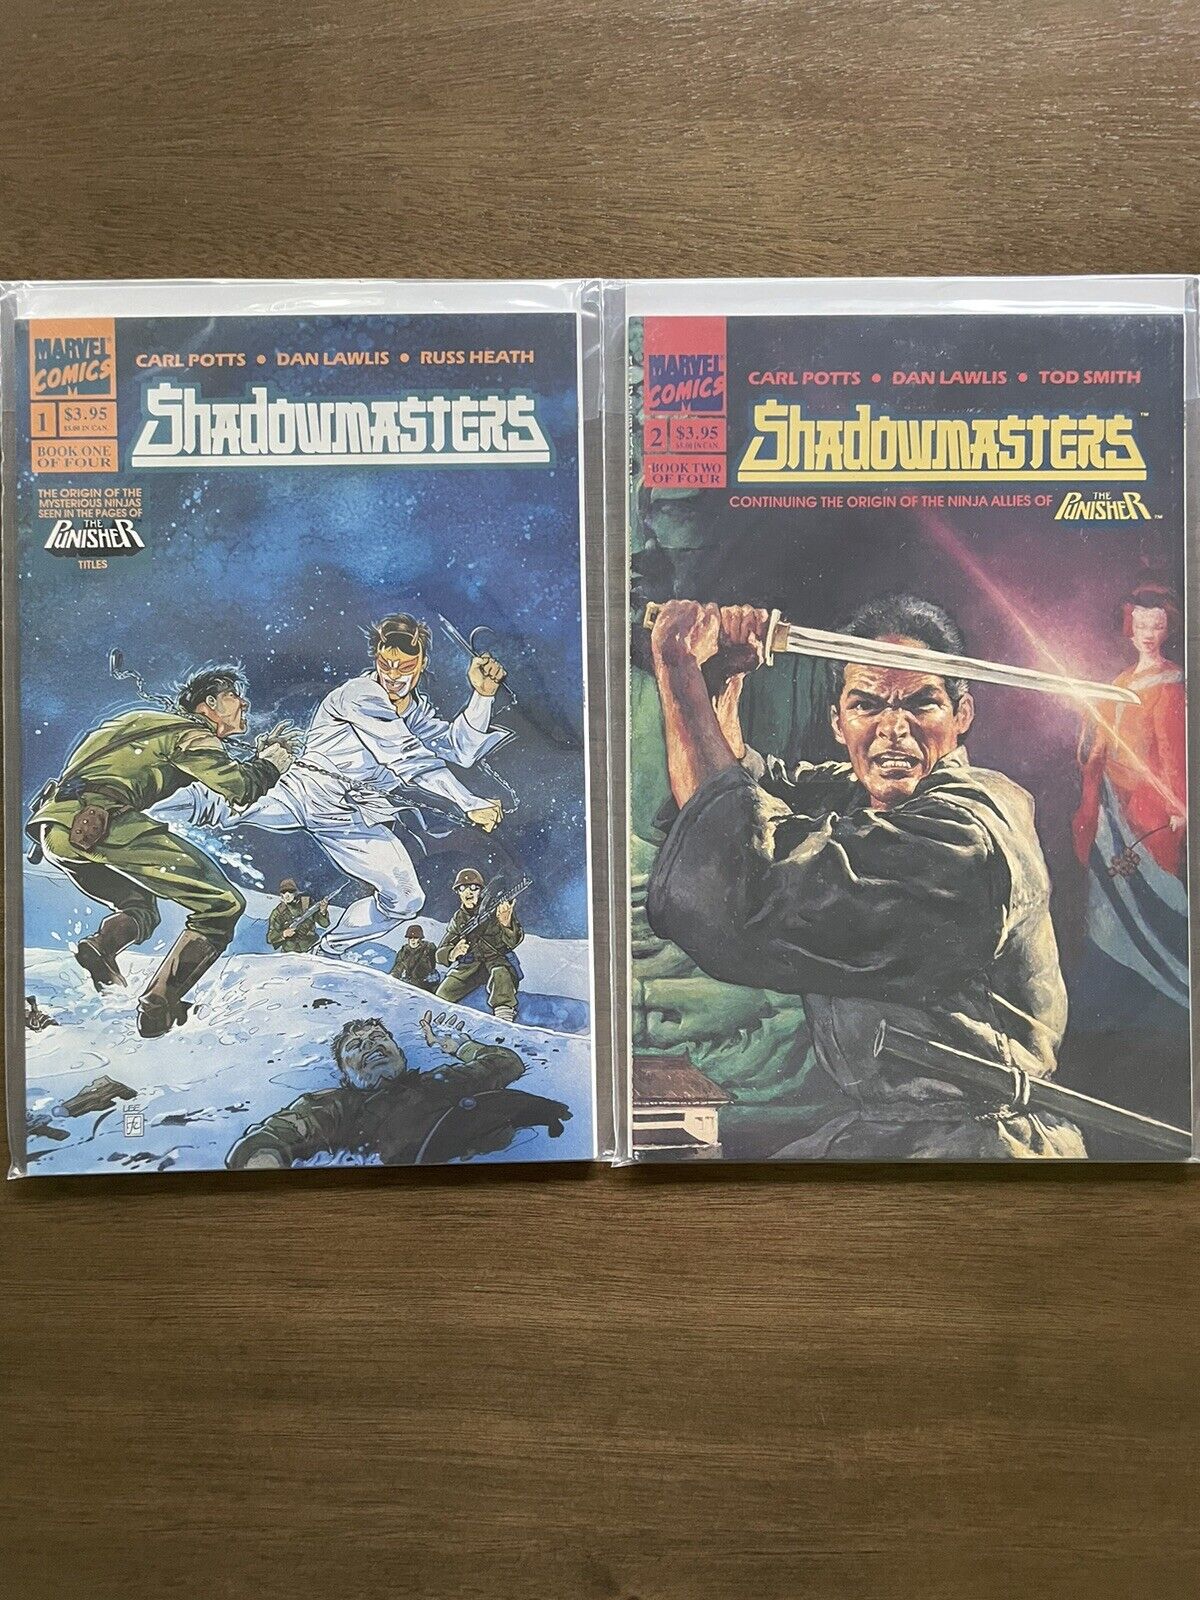 Shadowmasters #1 & 2 (Marvel Comics, October 1989) NM-